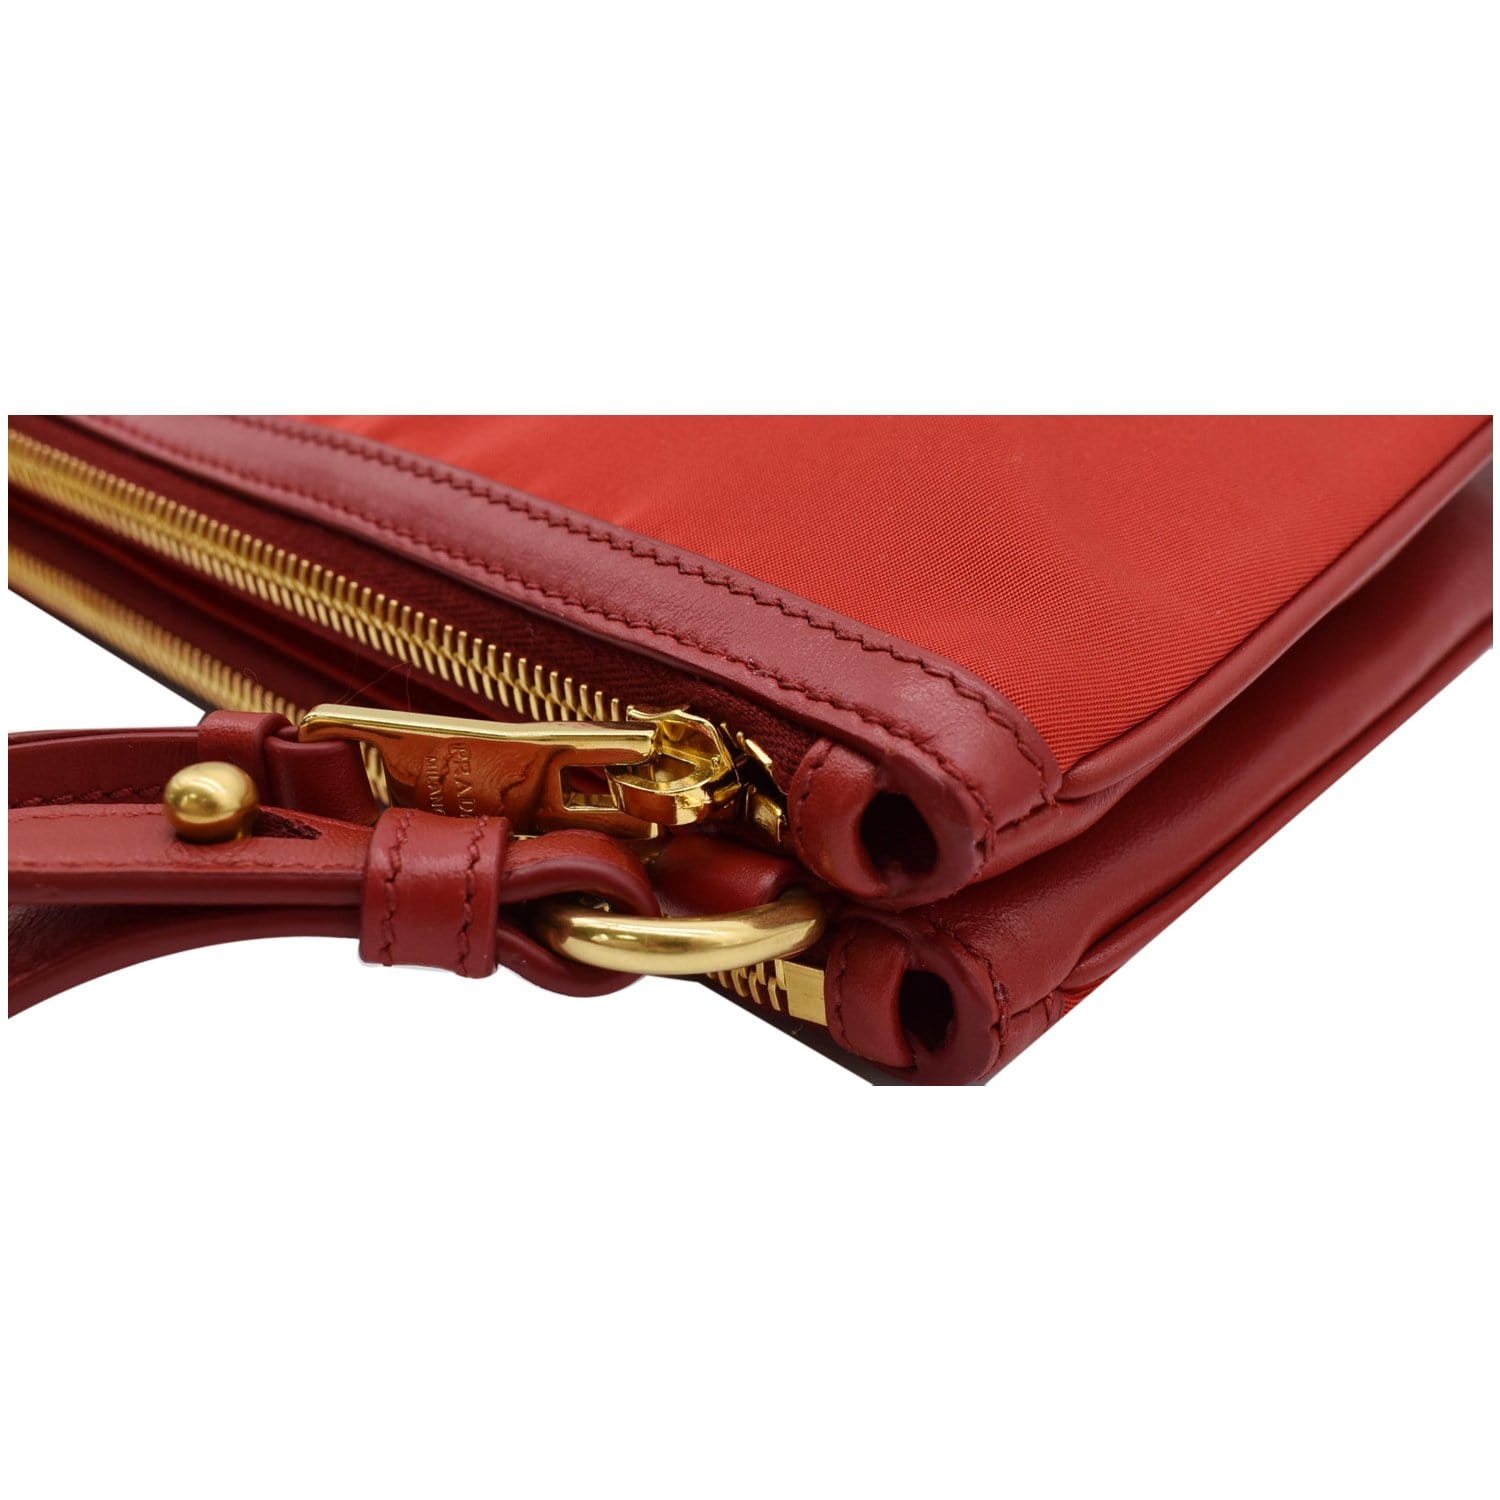 Prada Tessuto Bandoliera Double Zip Crossbody Bag